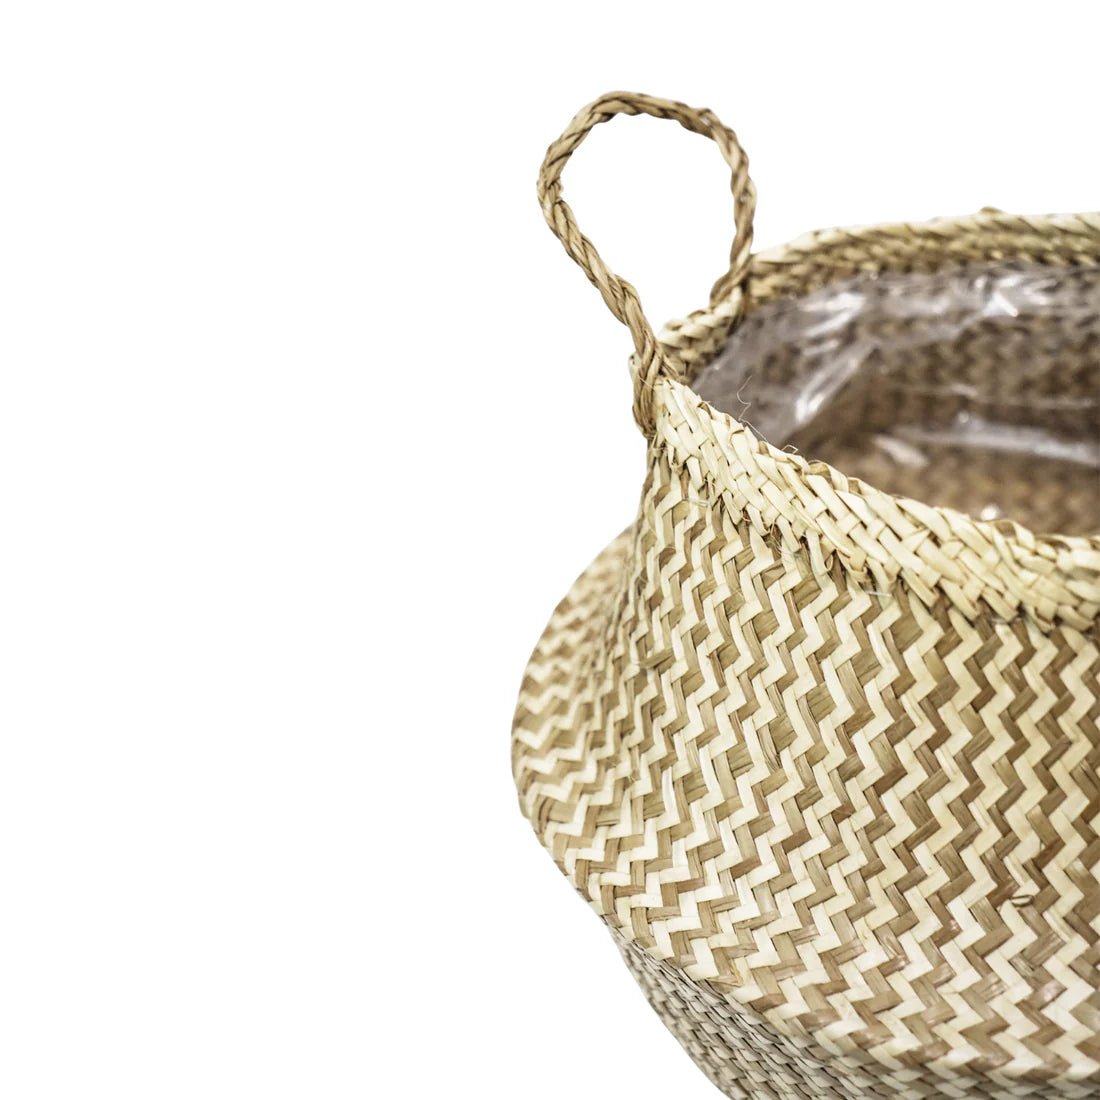 Seagrass Chevron Lined Basket White Medium